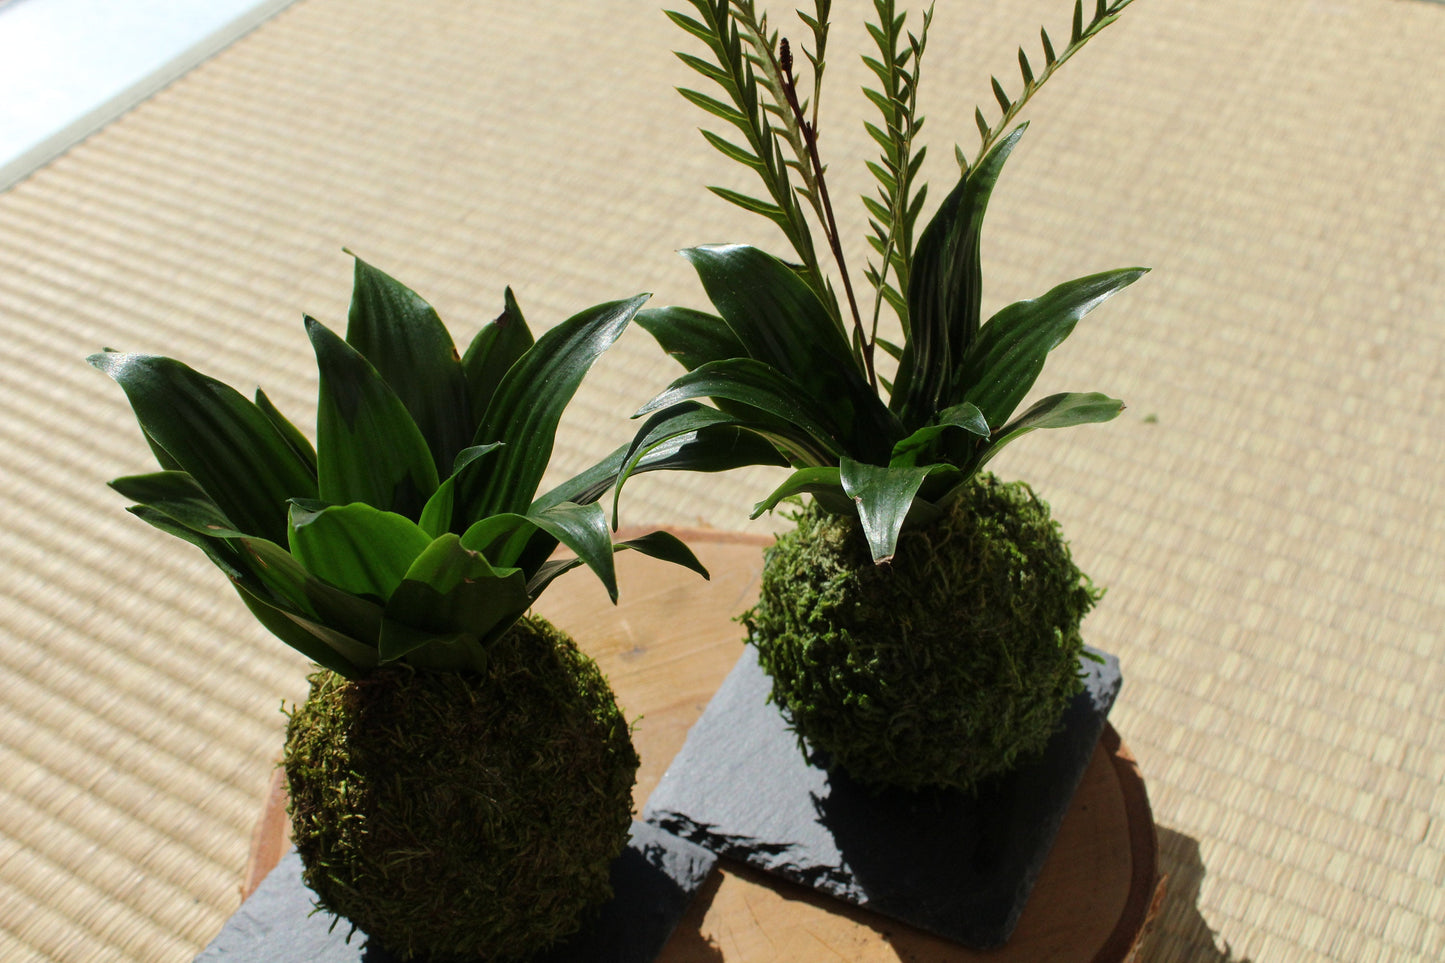 Mini Janet Craig plant  Kokedama - Moss ball, Living Japanese art, spin off of Bonsai!